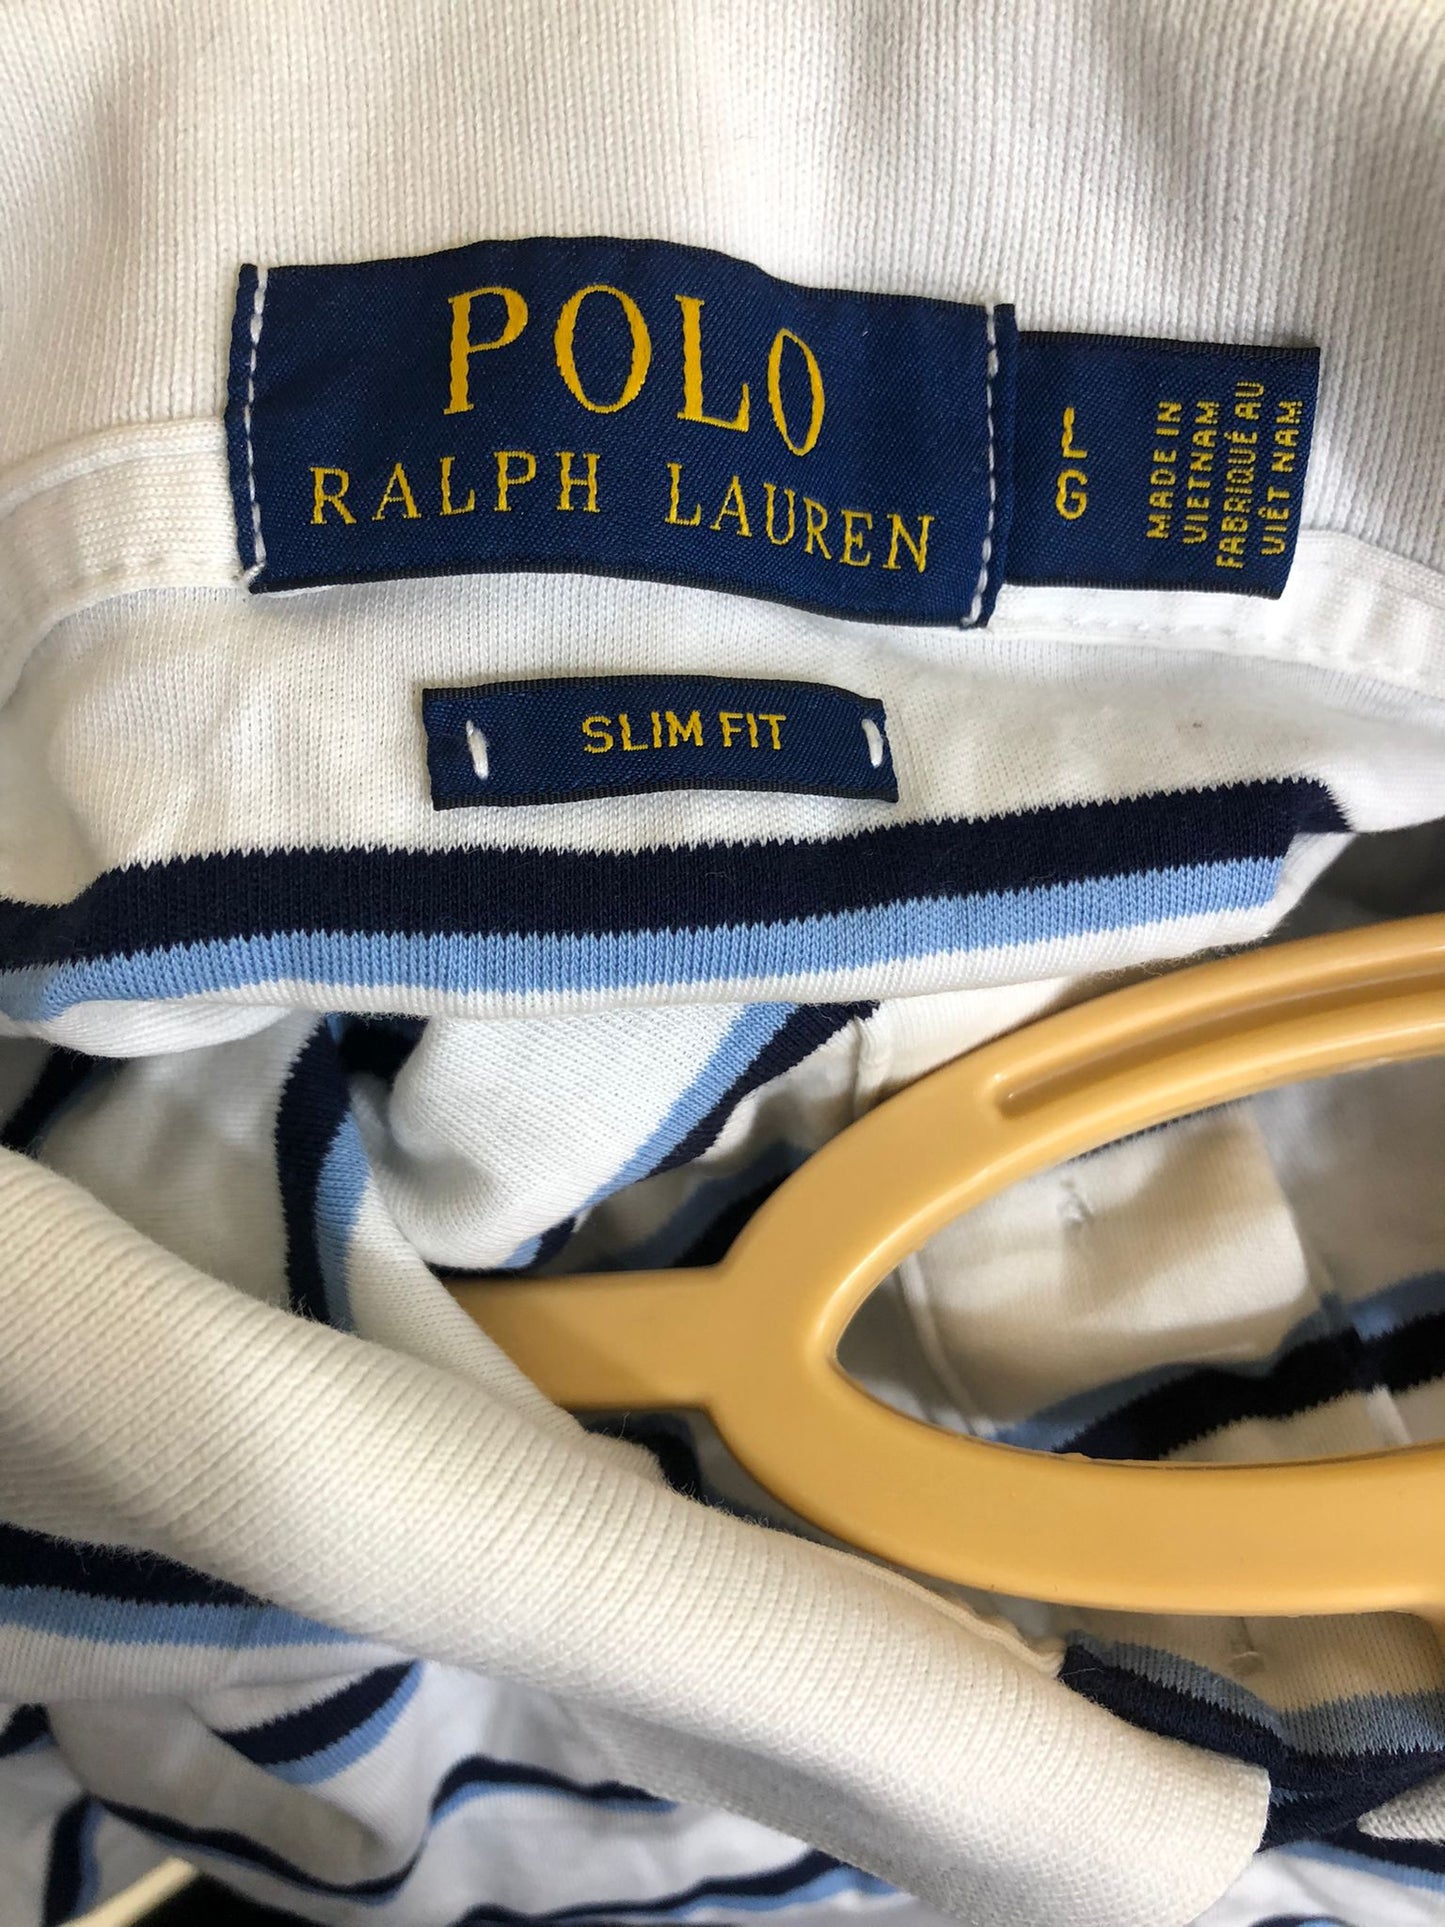 Vintage Polo Ralph Lauren 3 Button Collar tshirts